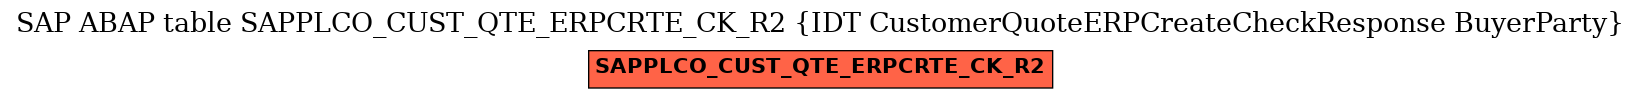 E-R Diagram for table SAPPLCO_CUST_QTE_ERPCRTE_CK_R2 (IDT CustomerQuoteERPCreateCheckResponse BuyerParty)